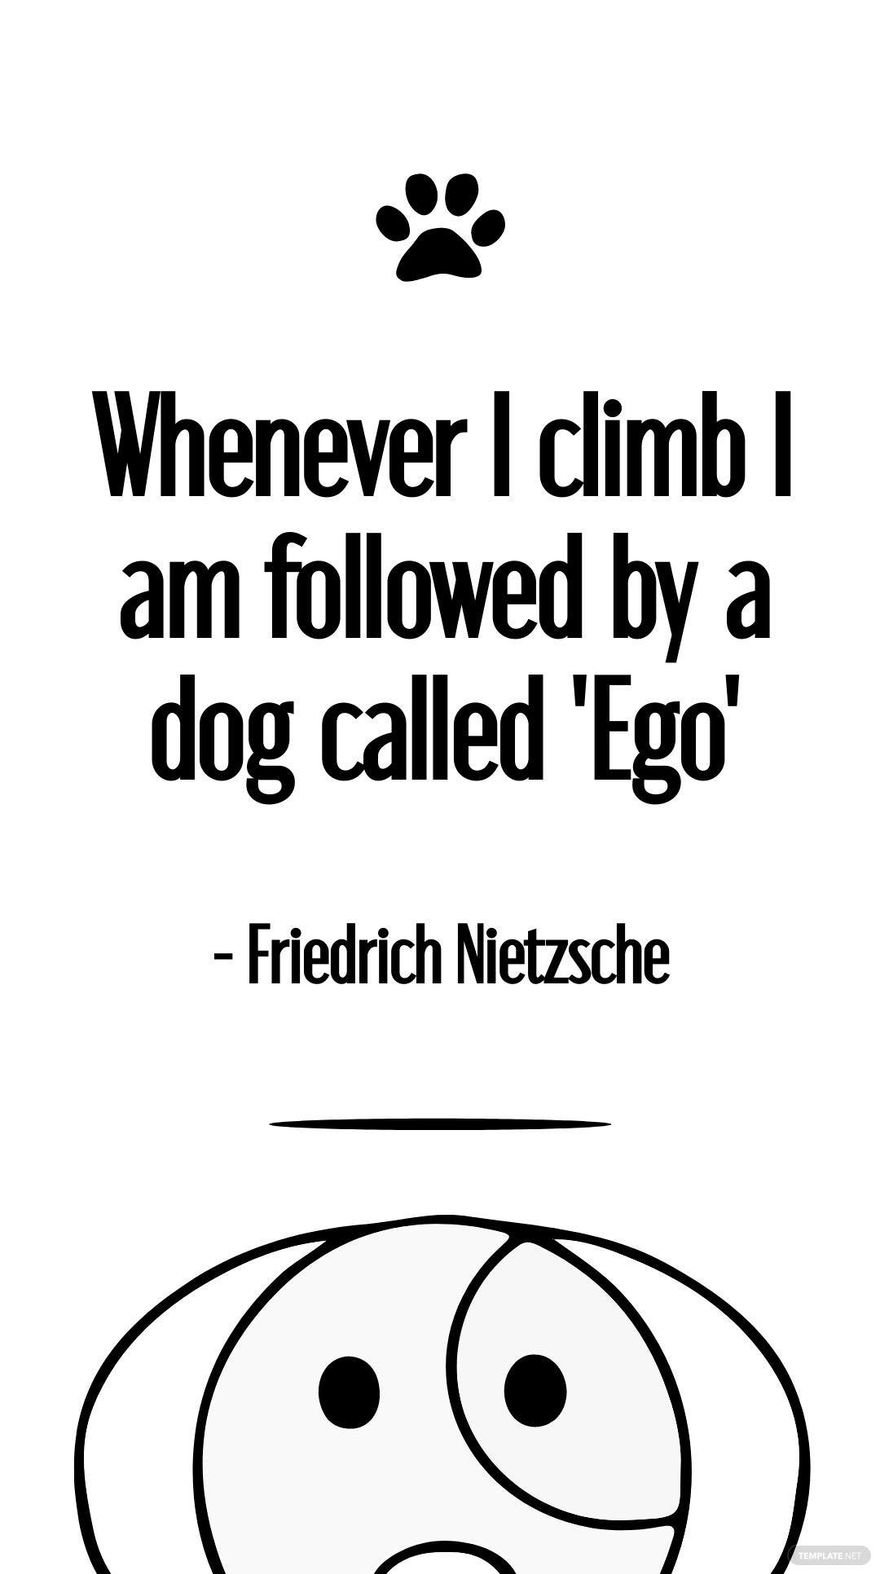 Friedrich Nietzsche - Whenever I climb I am followed by a dog called 'Ego'